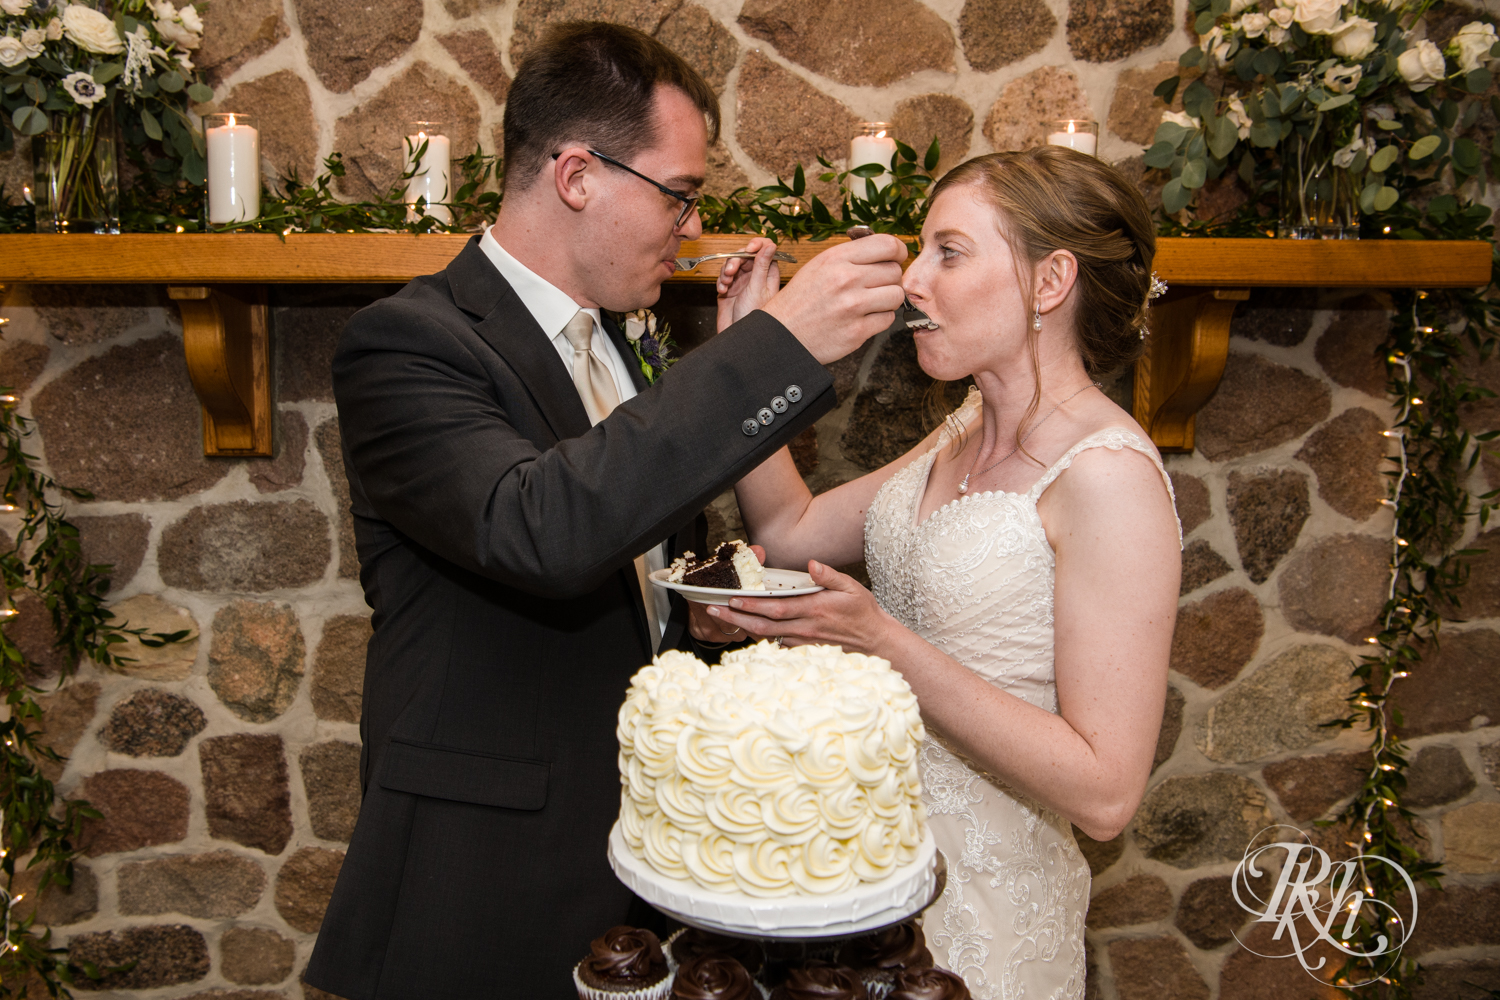 Bride and groom cut cake during wedding reception speeches at Oak Glen Golf Course in Stillwater, Minnesota.